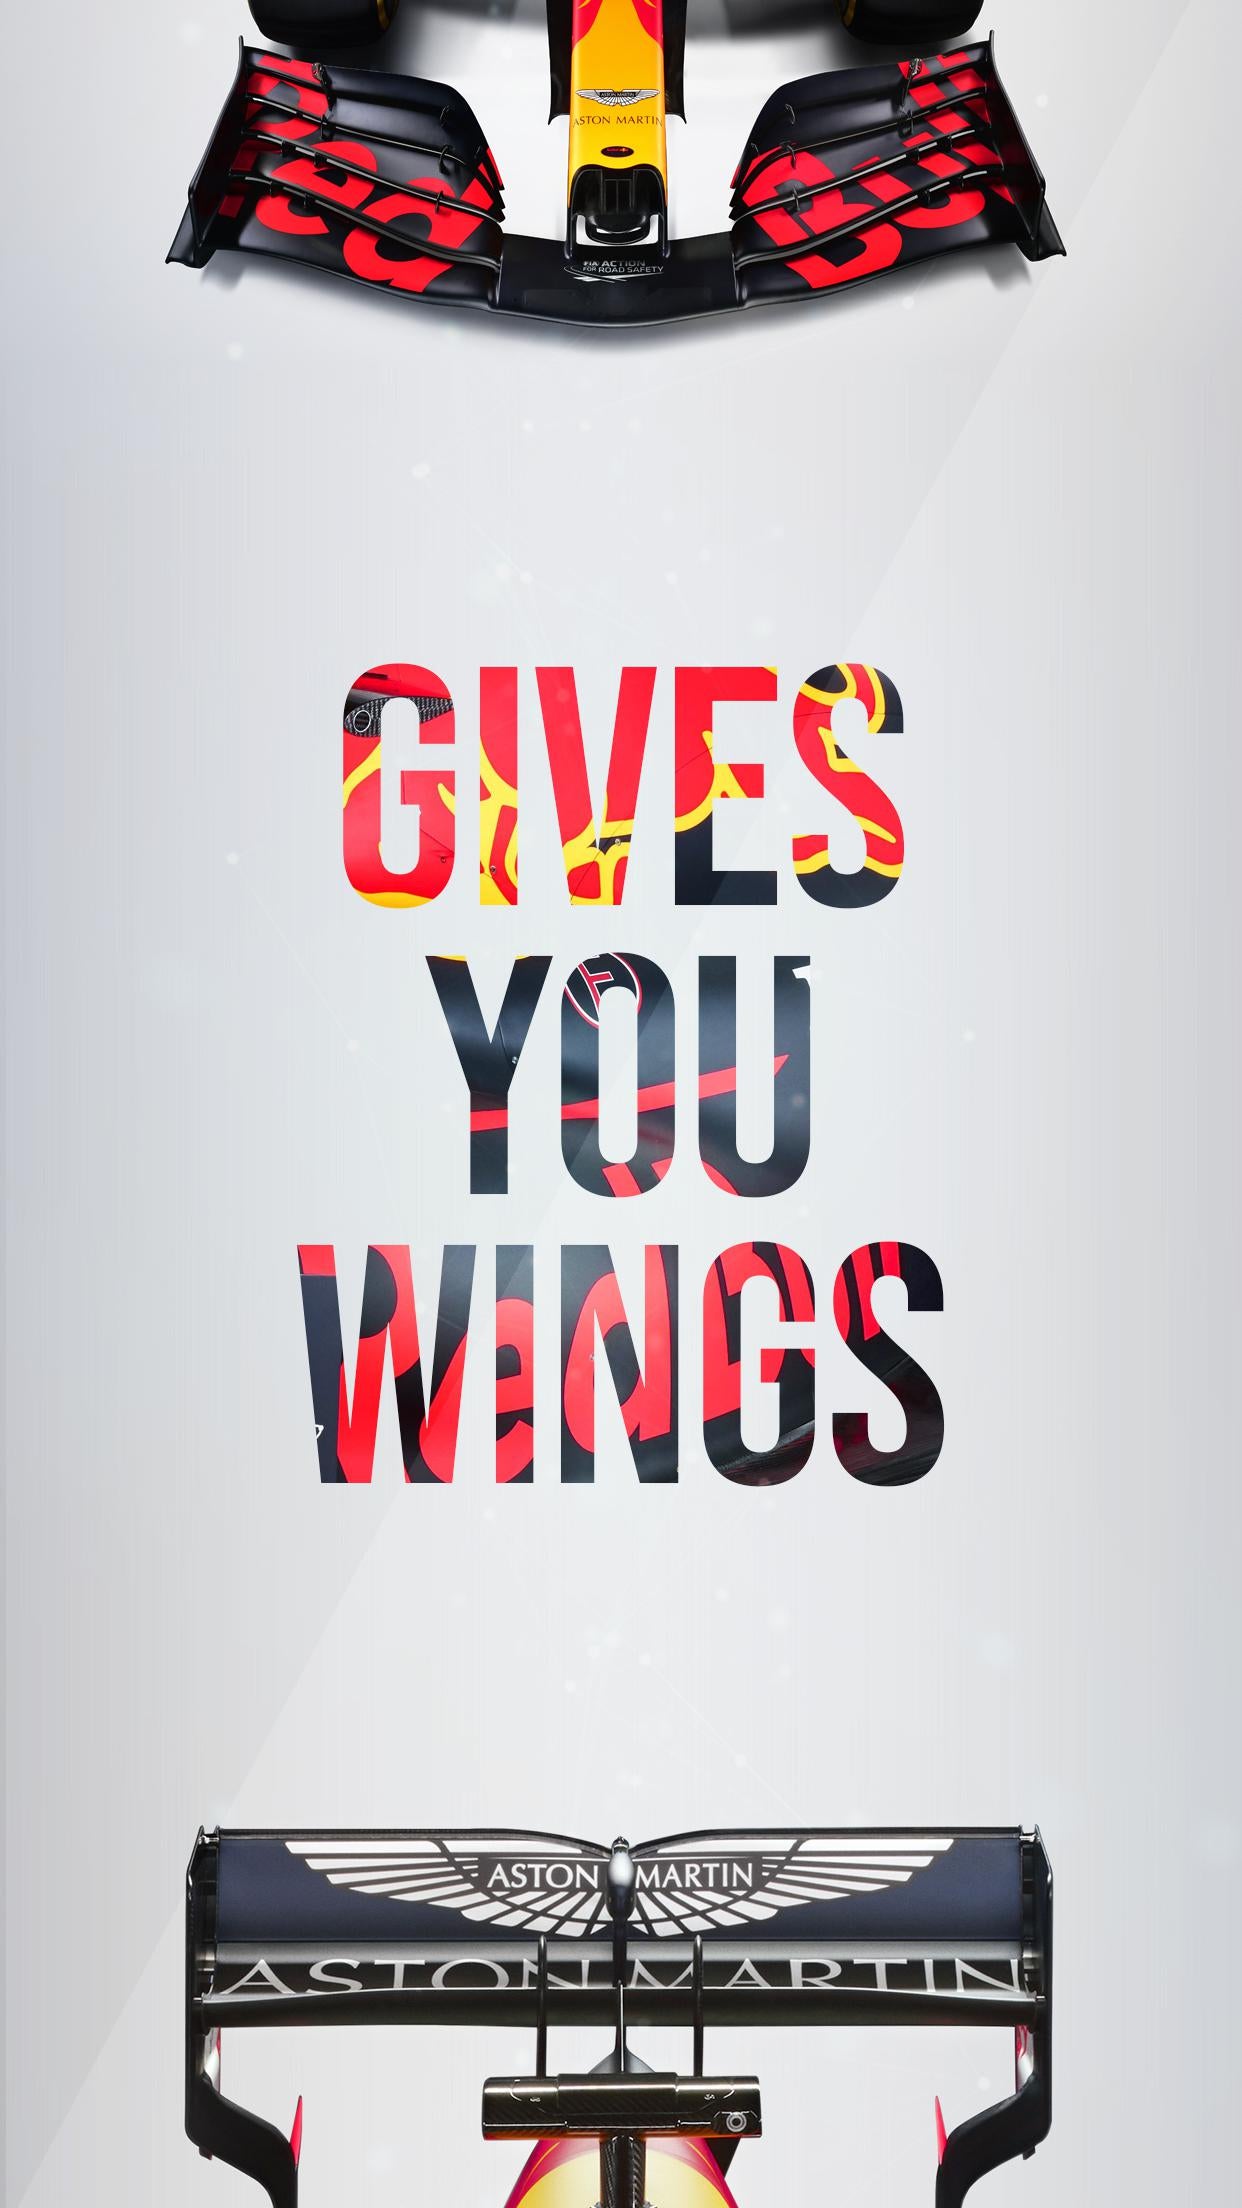 Red Bull iPhone wallpaper